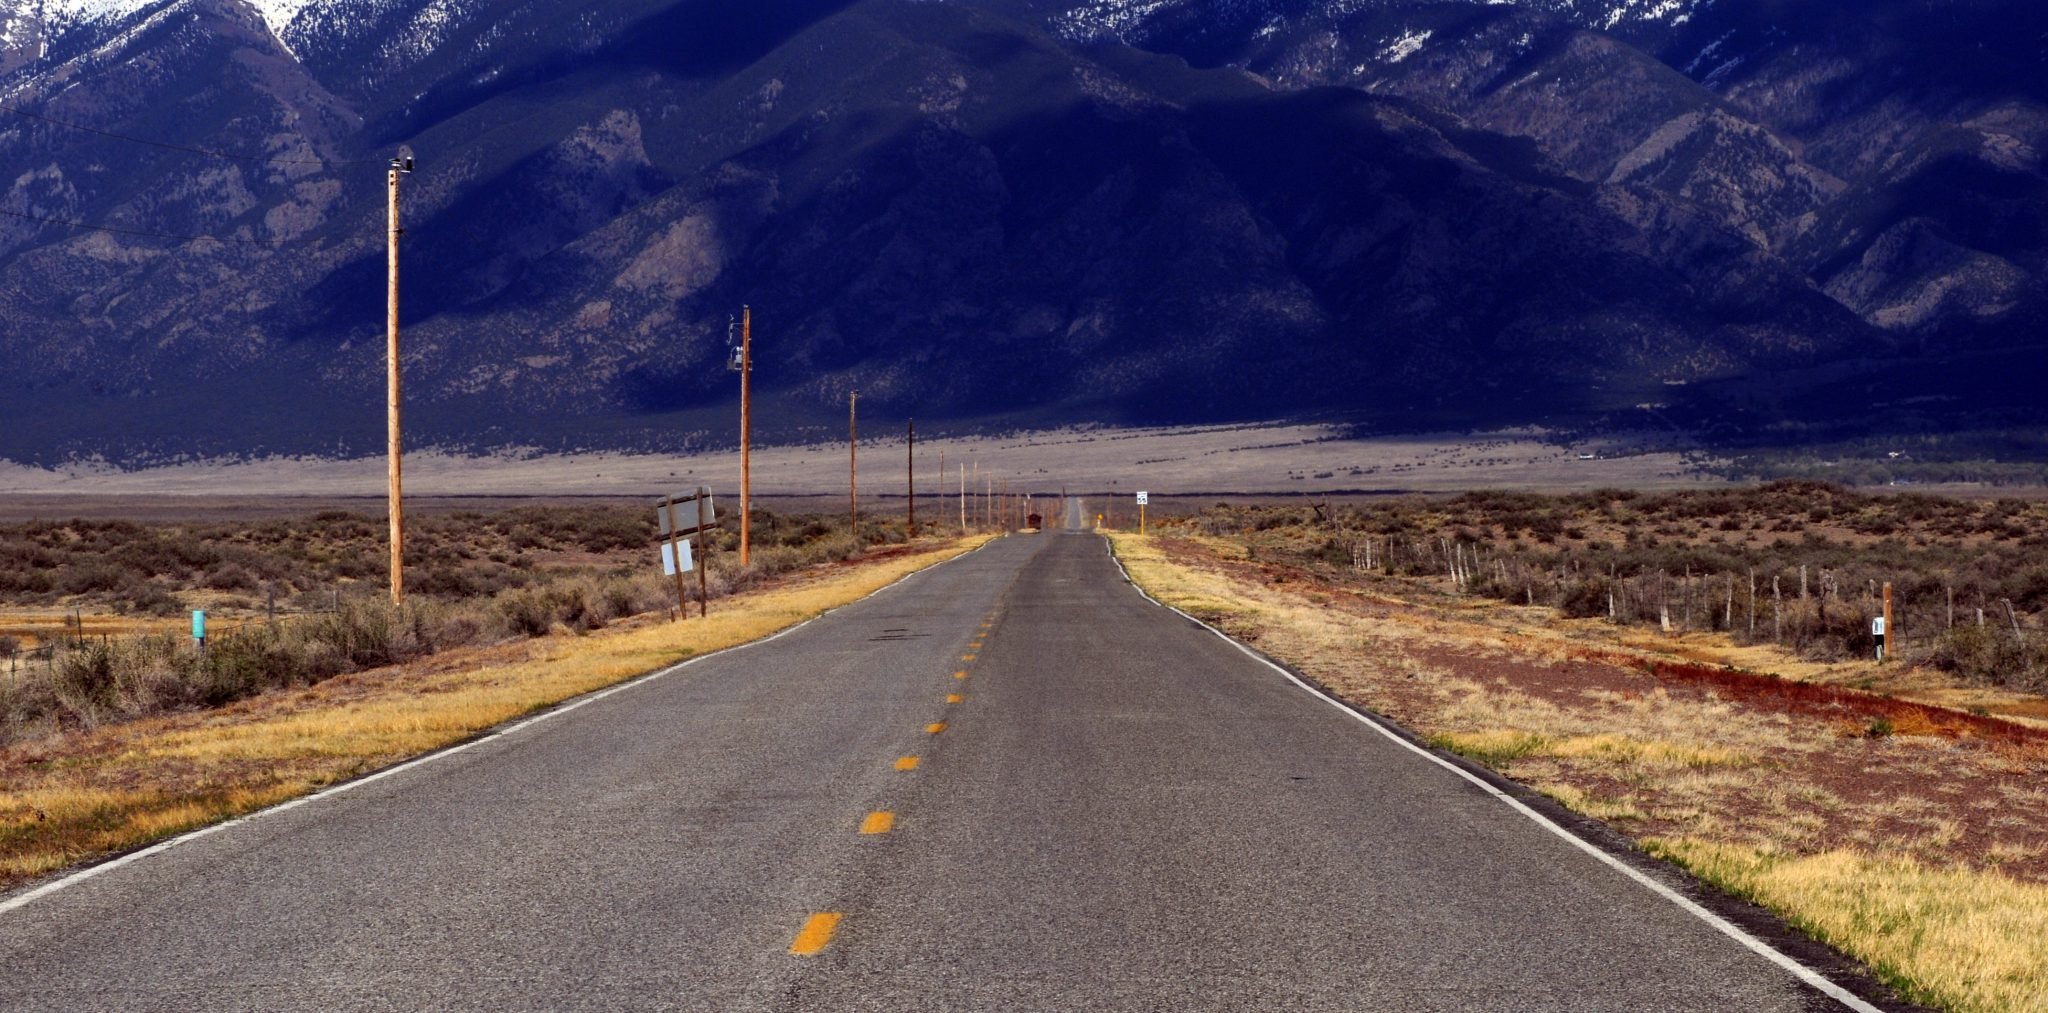 Colorado road image on bodyguard litigation settlement demand letter